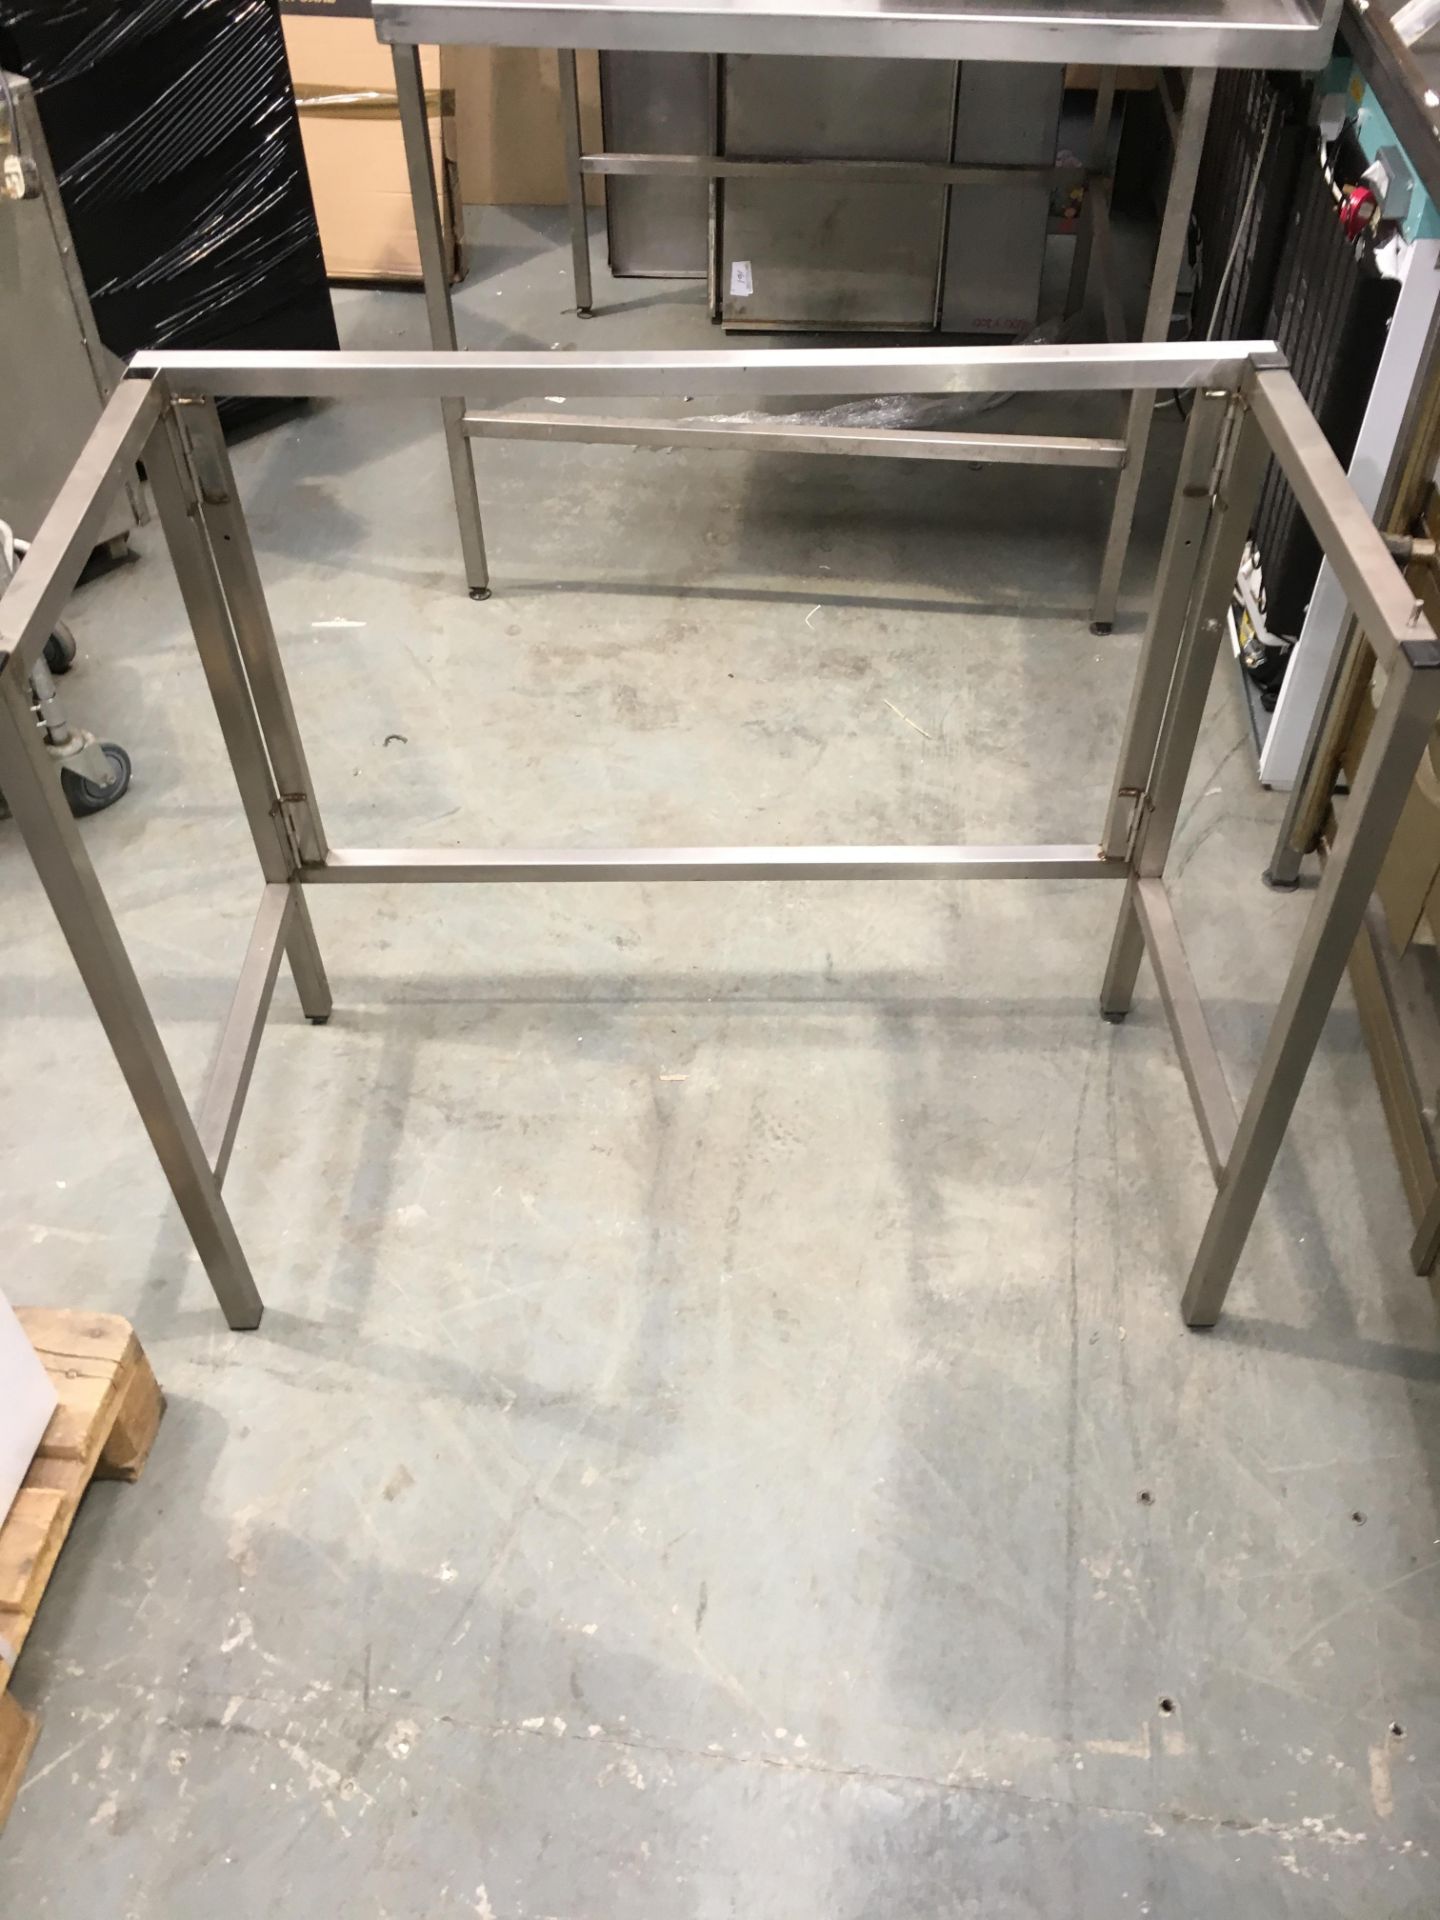 Stainless Steel Sink Unit with Folding Legs - Bild 2 aus 3